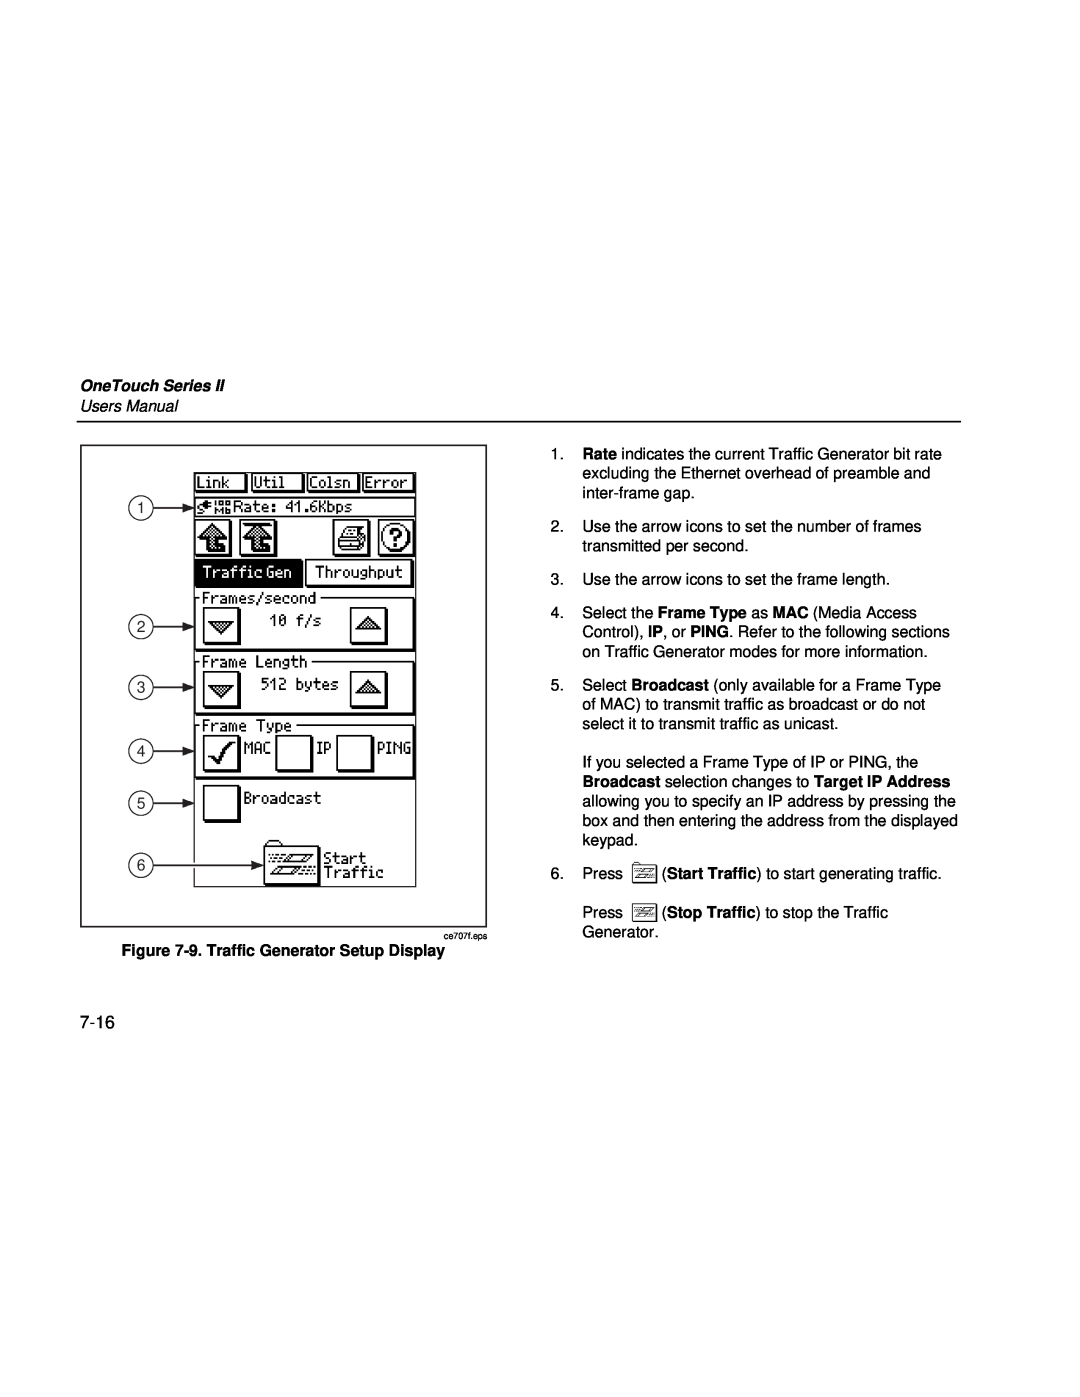 Fluke Series II user manual 7-16, OneTouch Series, Users Manual, 9. Traffic Generator Setup Display 